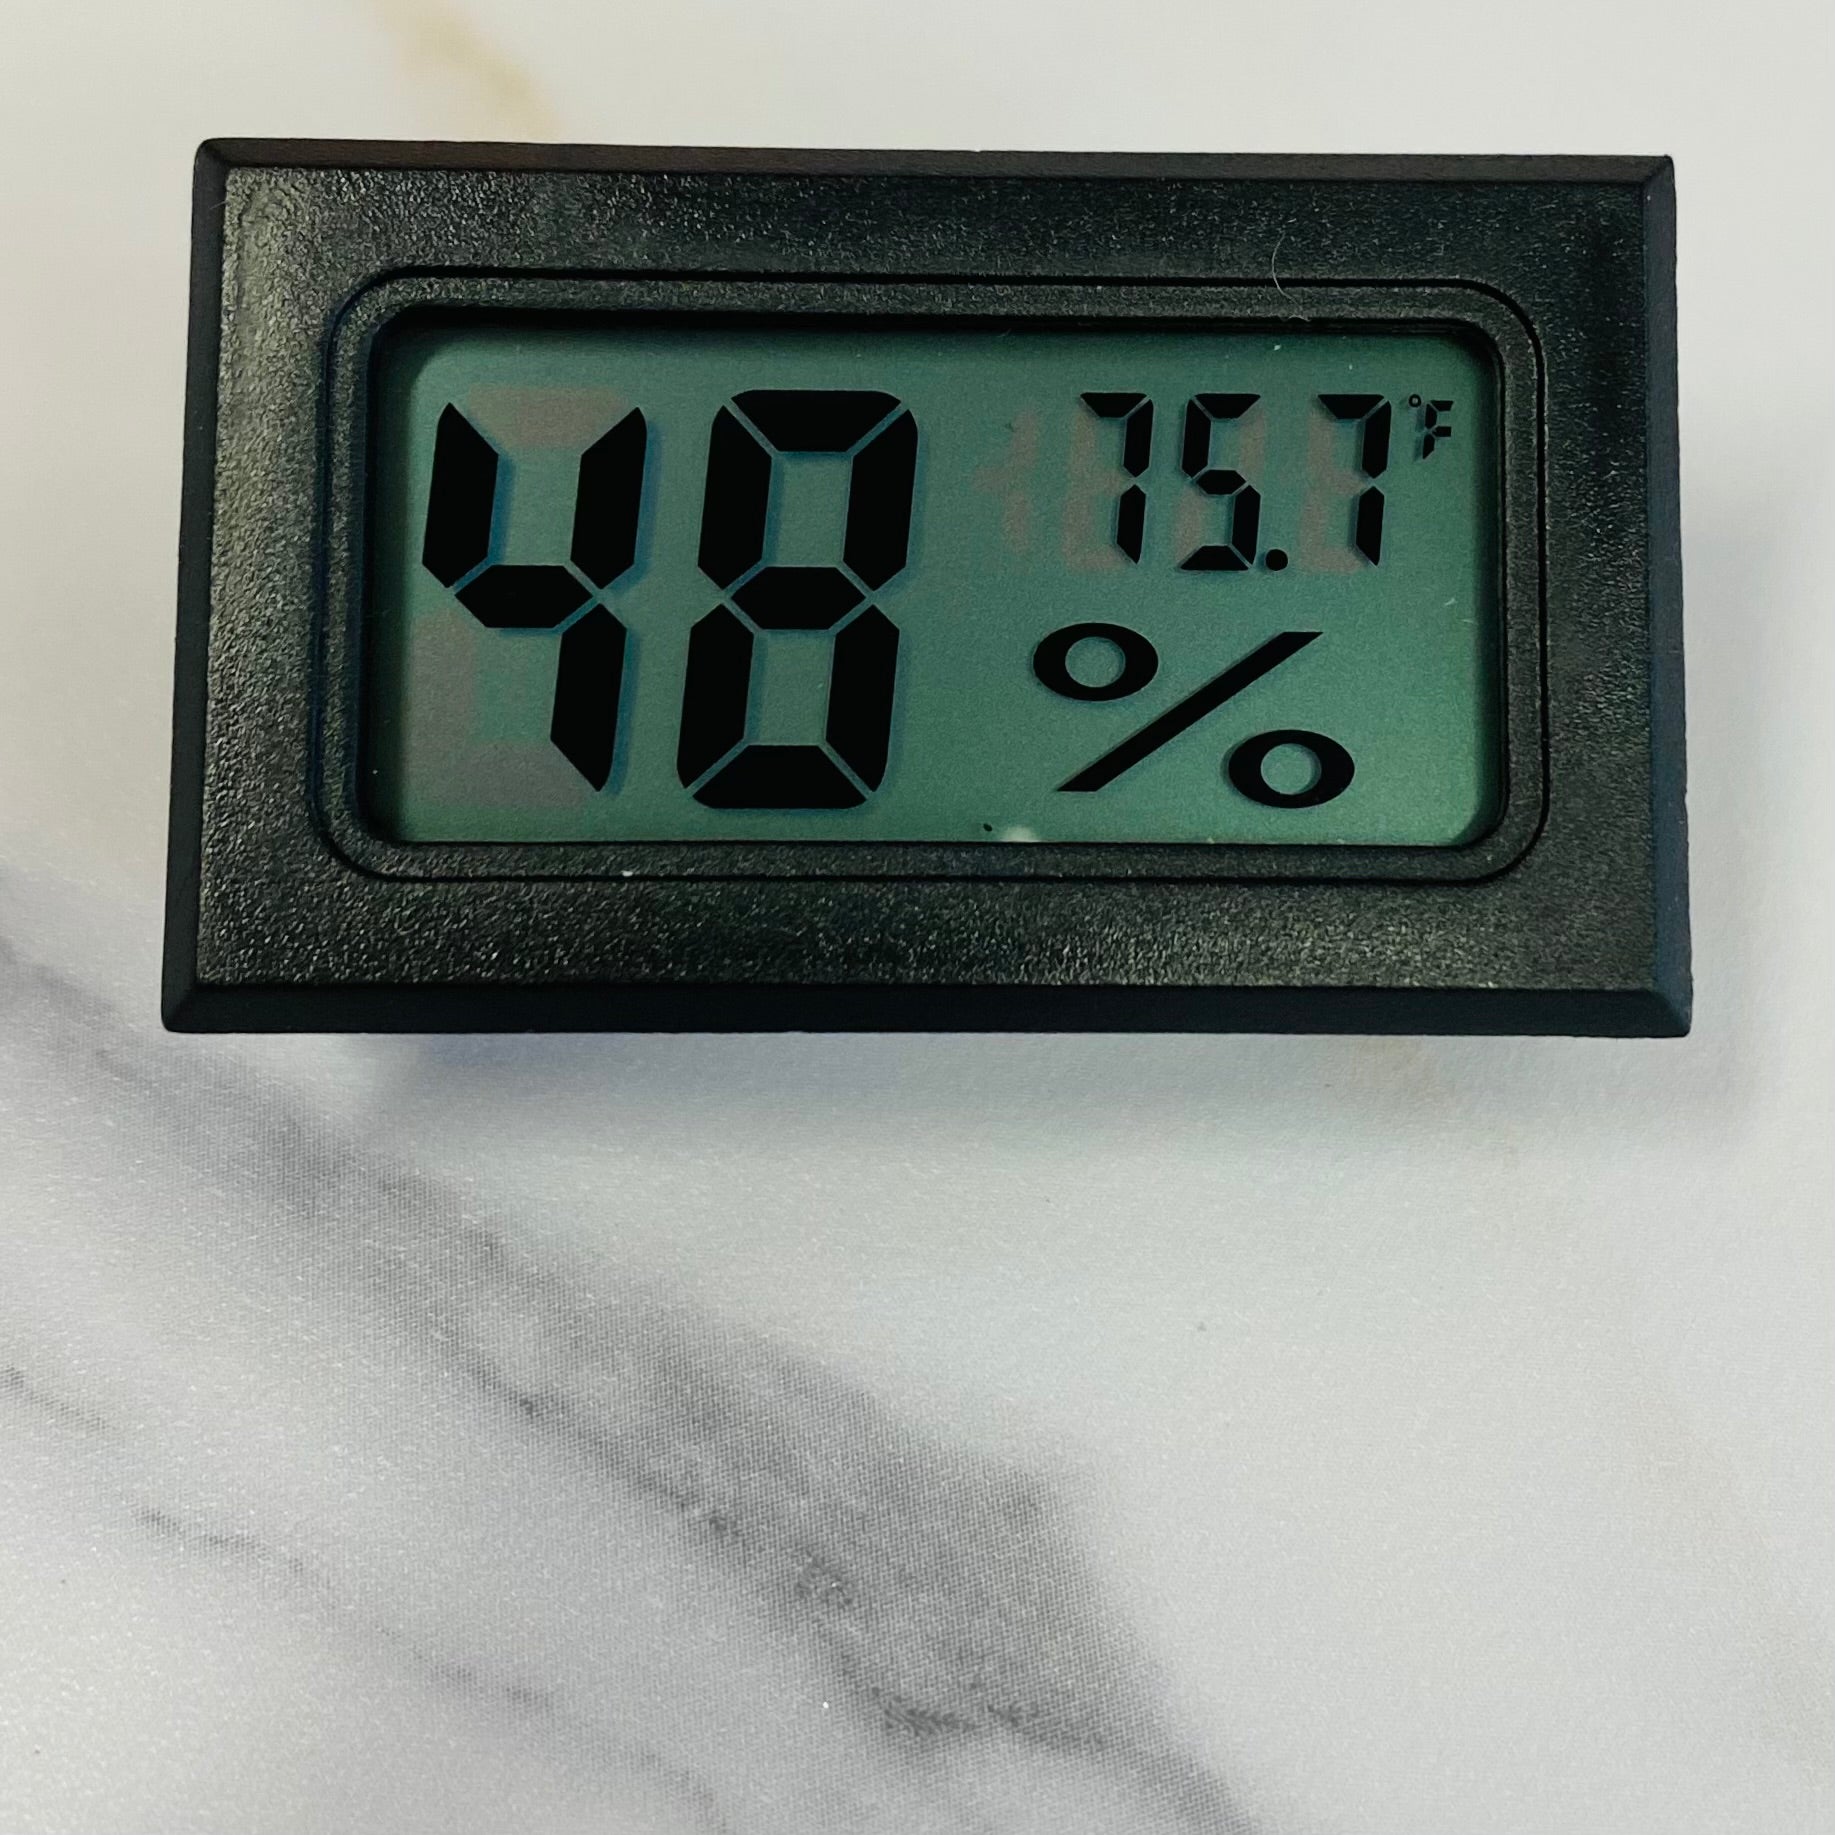 Digital Humidity and Temperature Meter